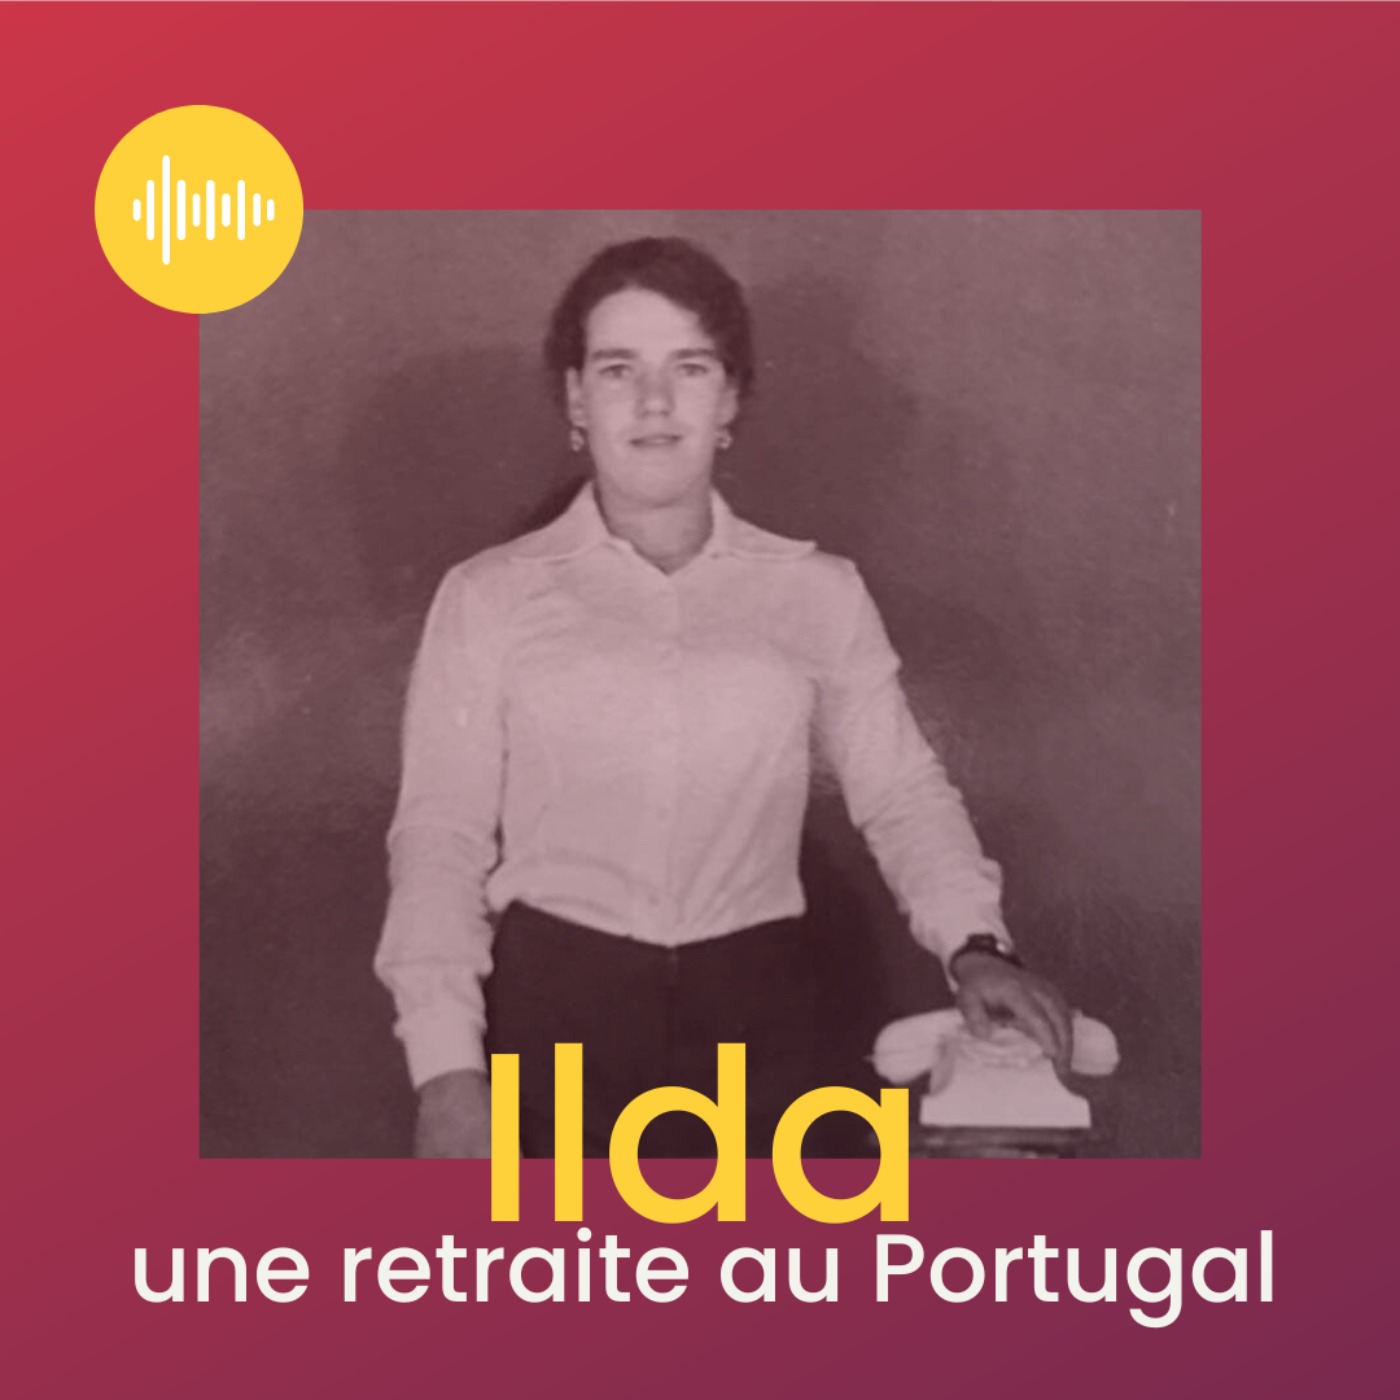 Ilda, une retraite au Portugal